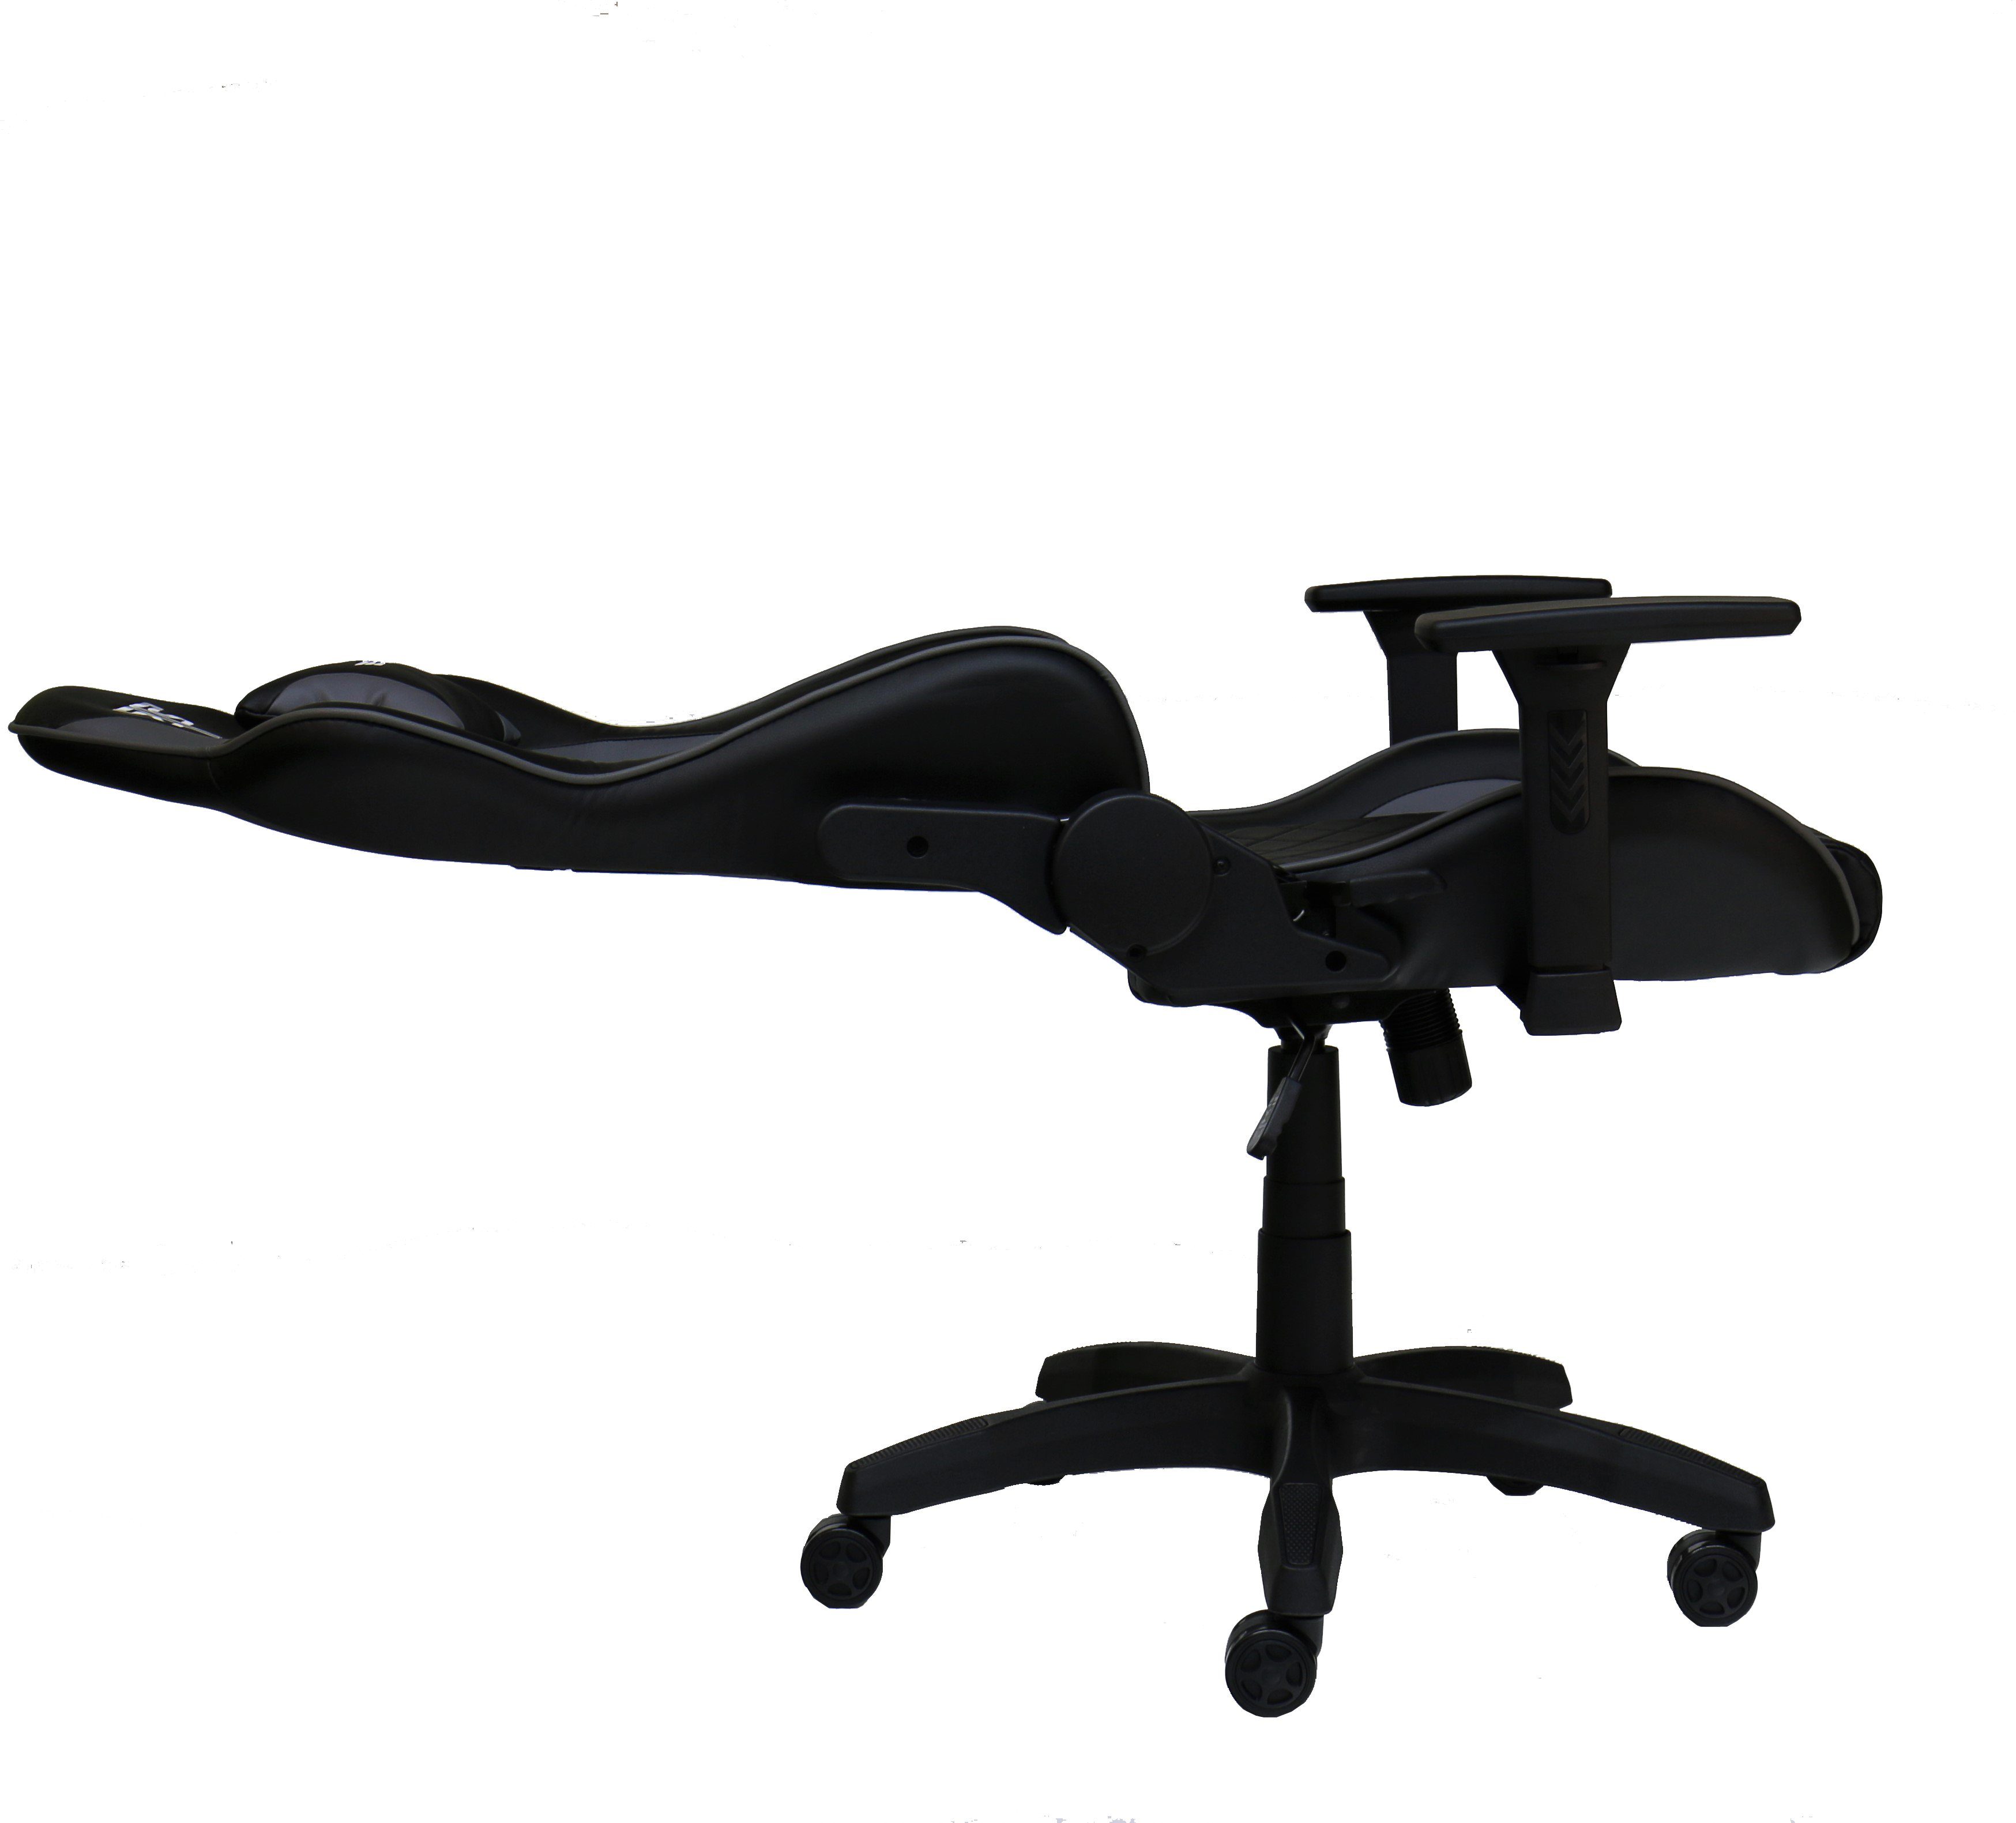 "Comander" Striker 3D-Armlehnen Hyrican Gaming-Stuhl ergonomischer Gaming-Stuhl Gamingstuhl,